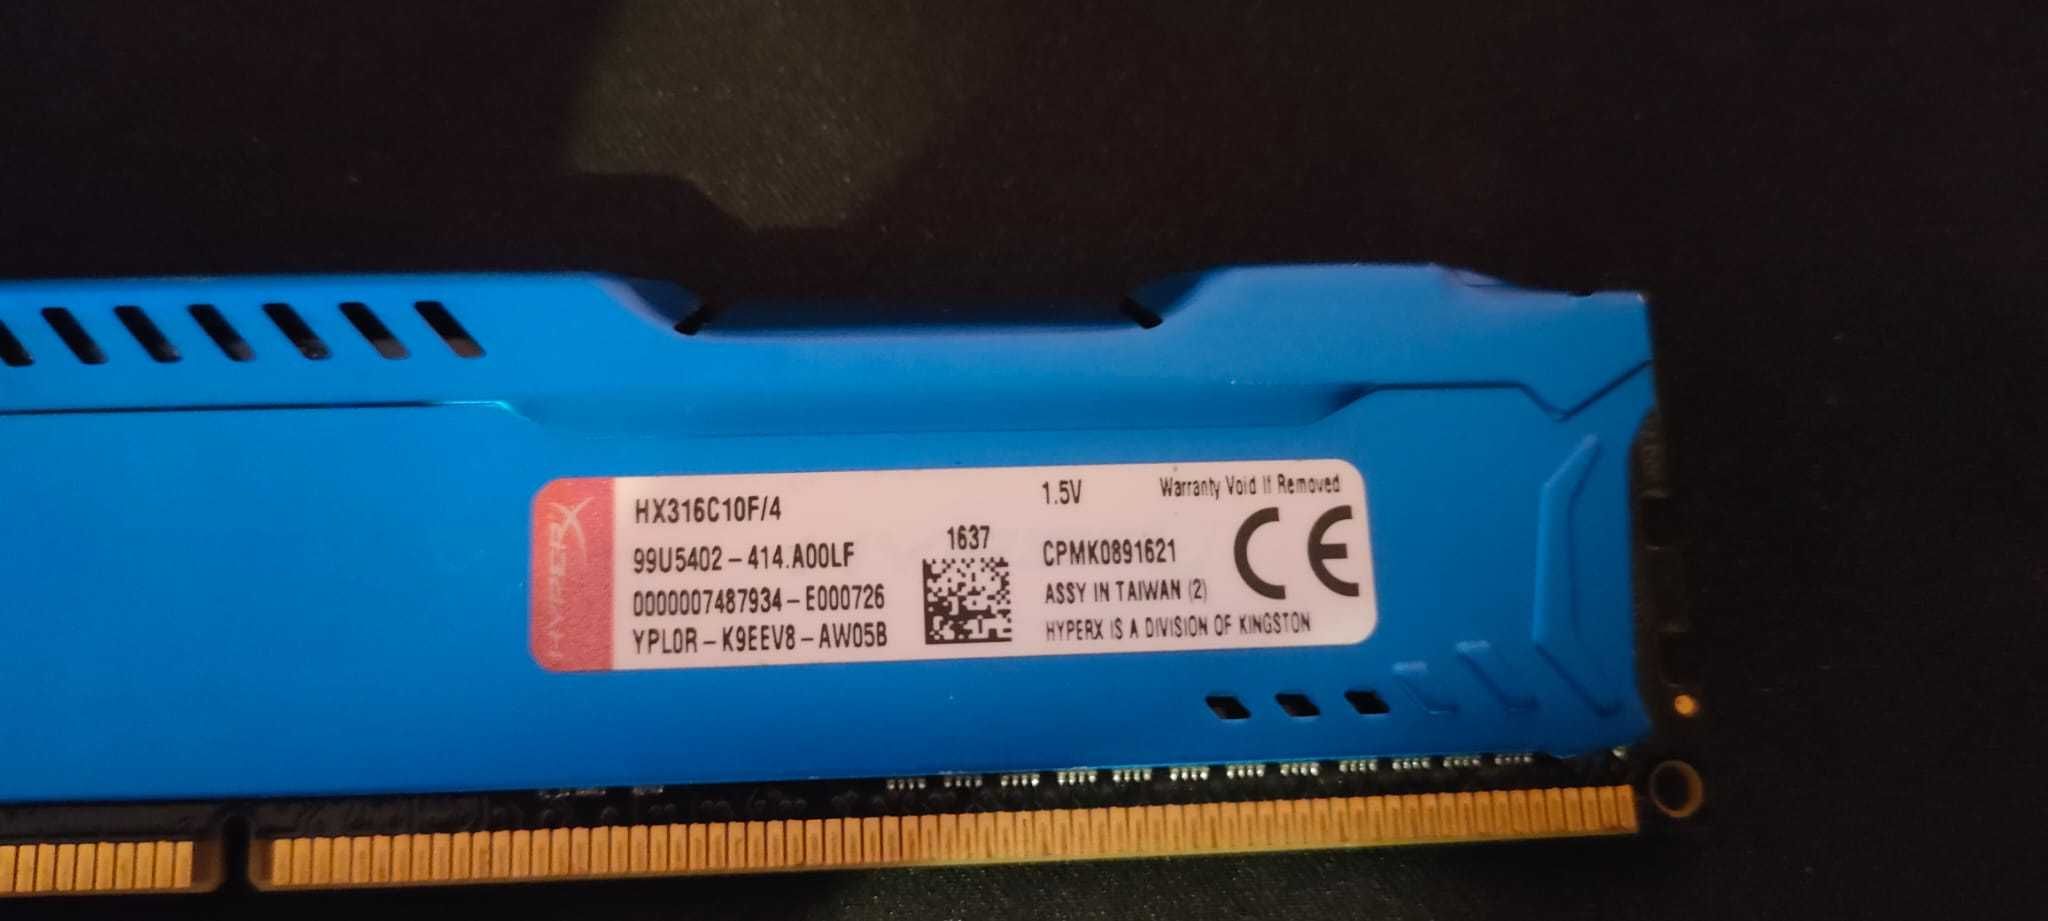 Memorie HyperX FURY Blue 4GB, DDR3, 1600MHz, CL10, 1.5V HX316C10F/4